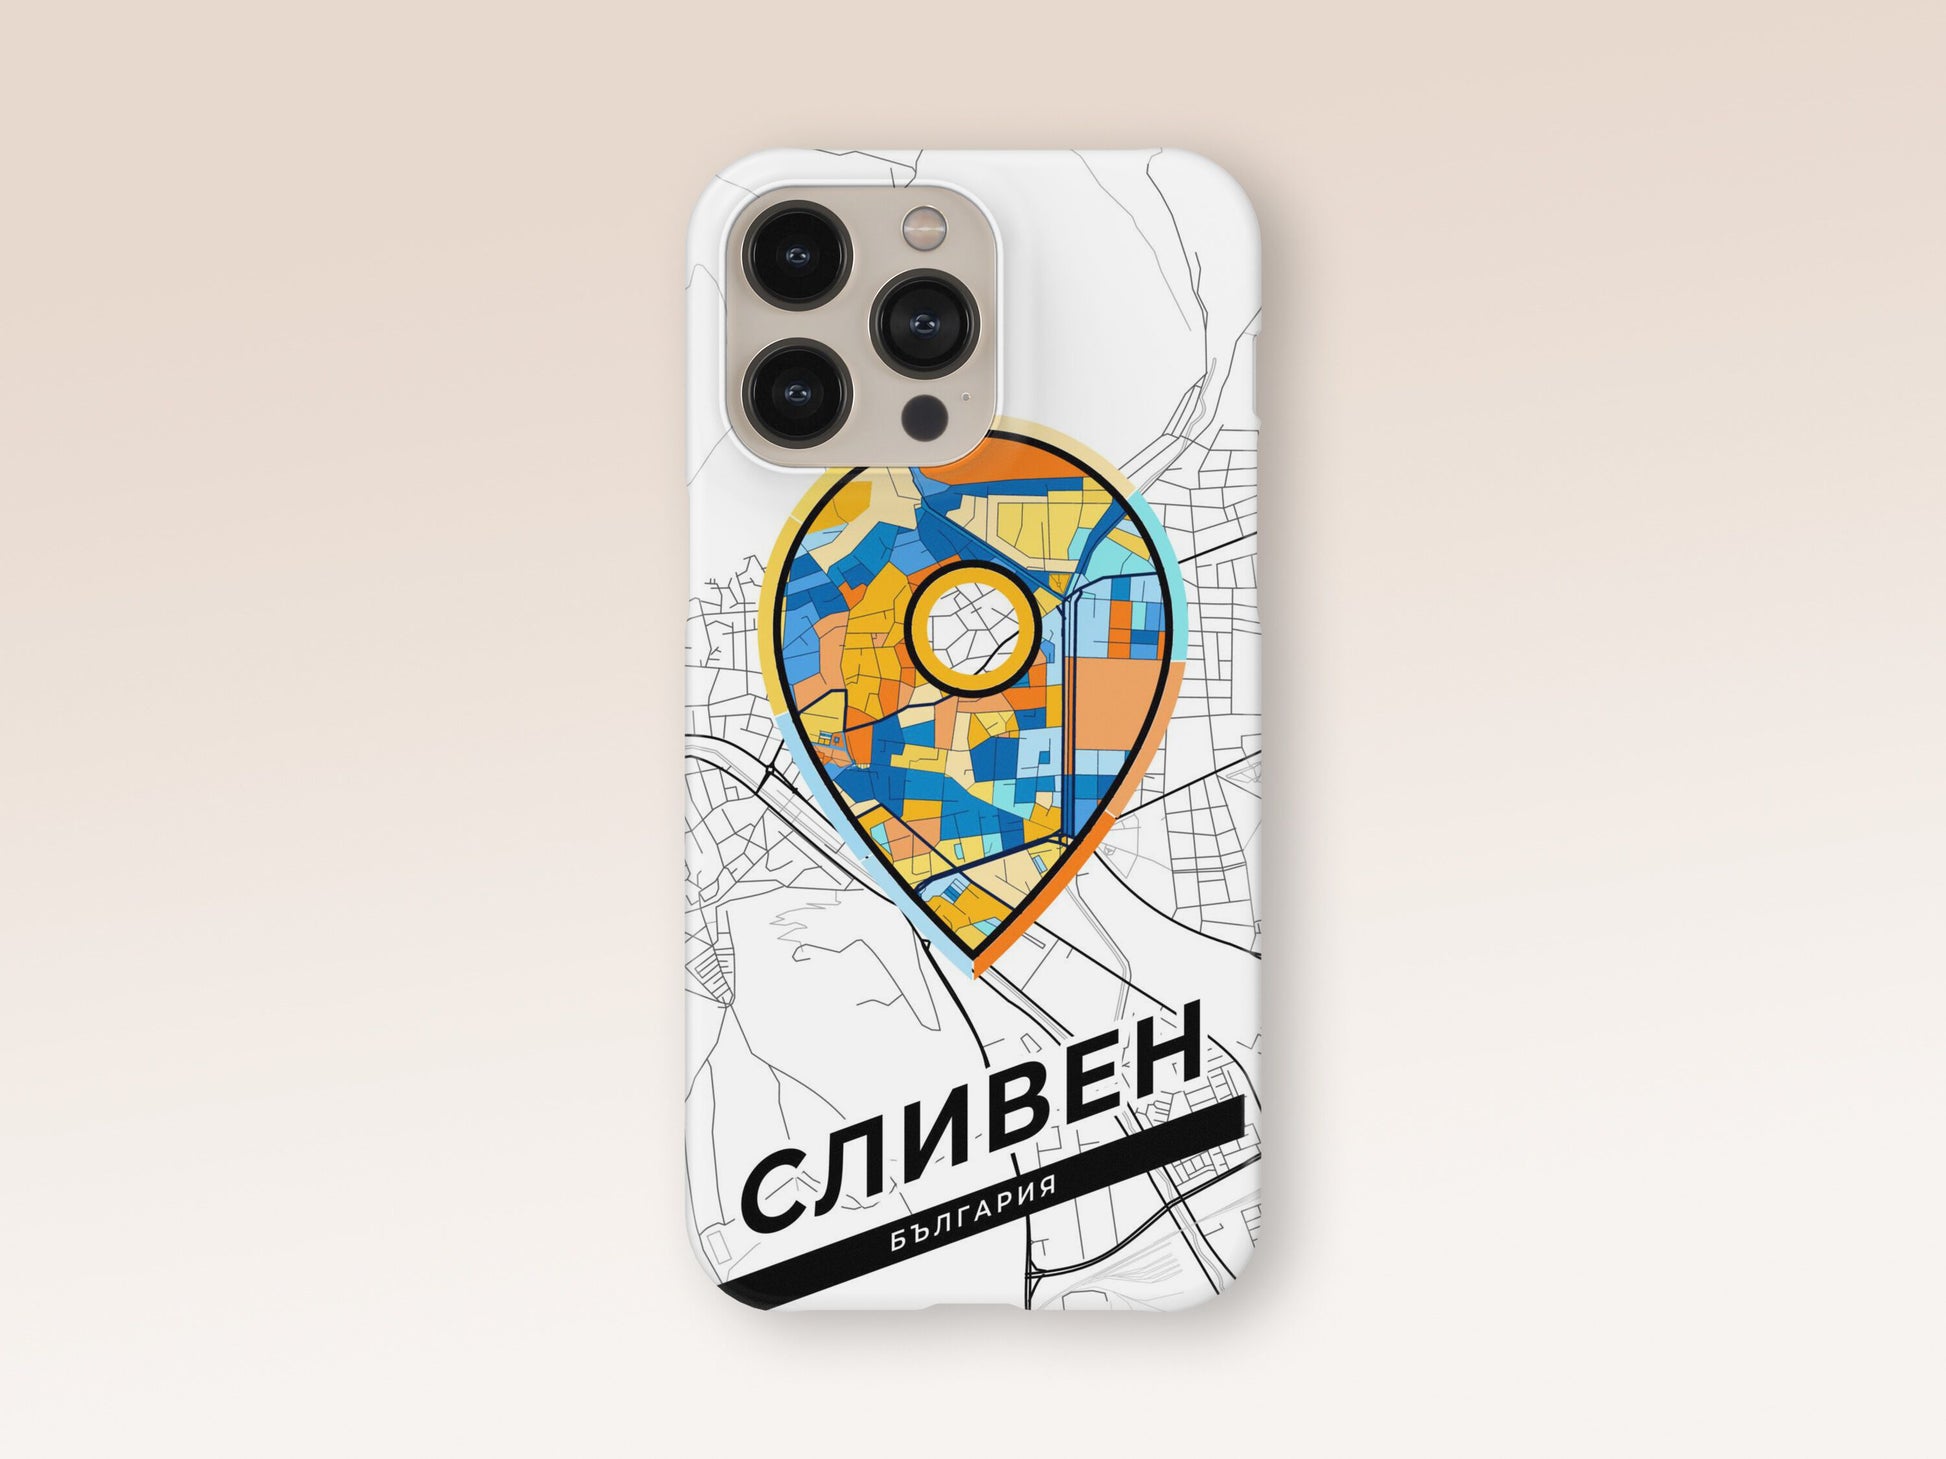 Сливен България slim phone case with colorful icon 1